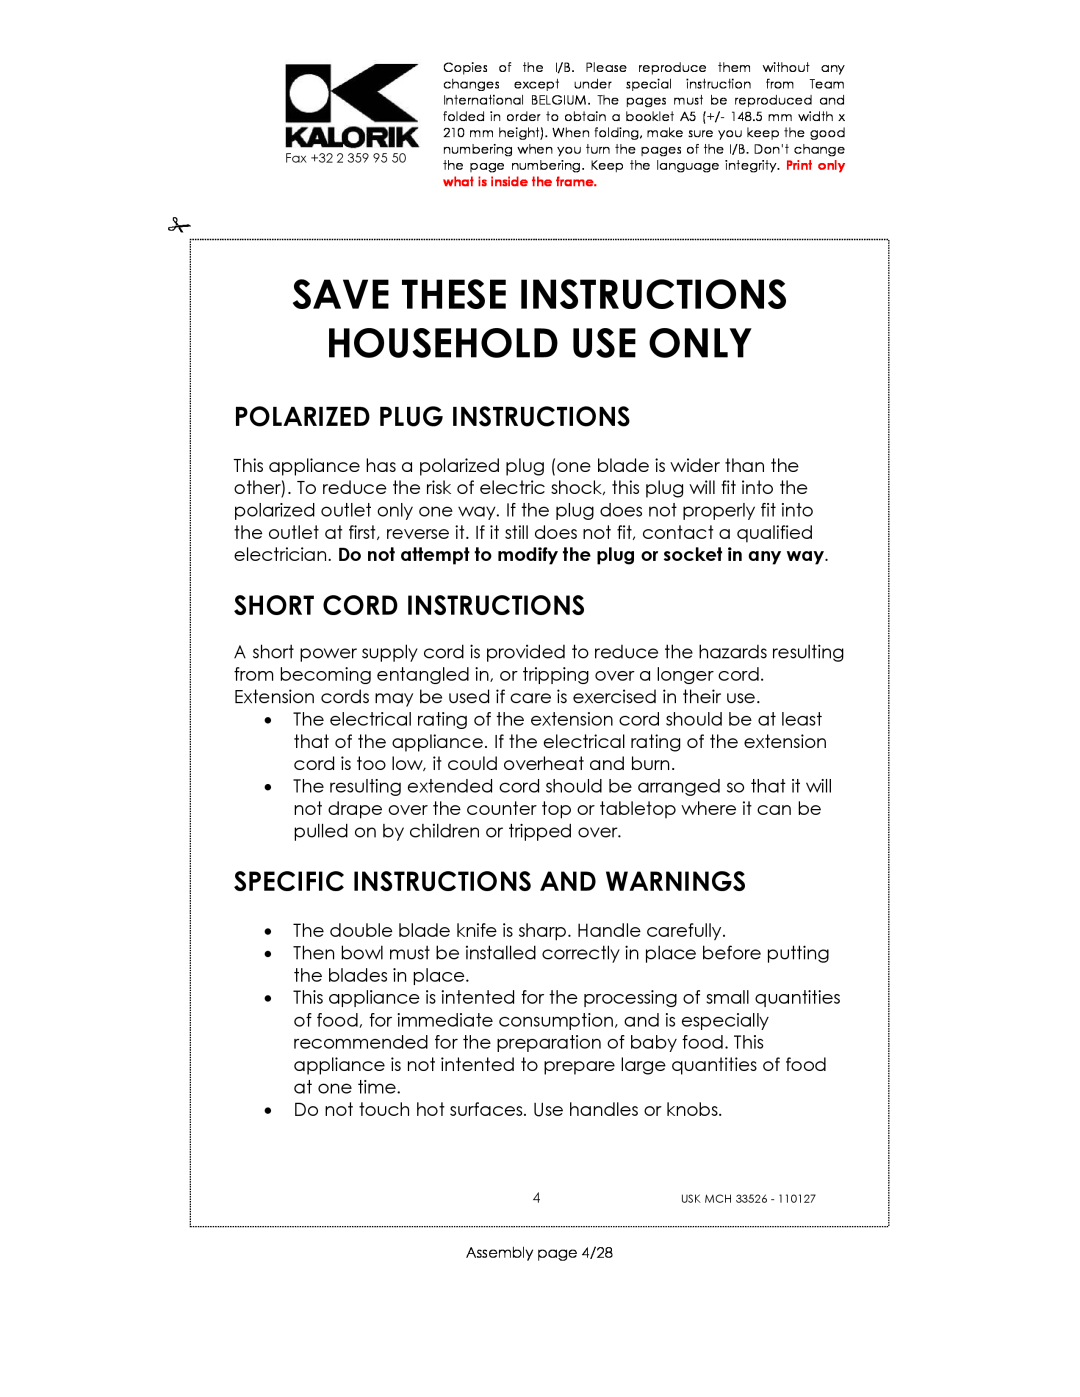 Kalorik USK MCH 33526 Save These Instructions Household Use Only, Polarized Plug Instructions, Short Cord Instructions 